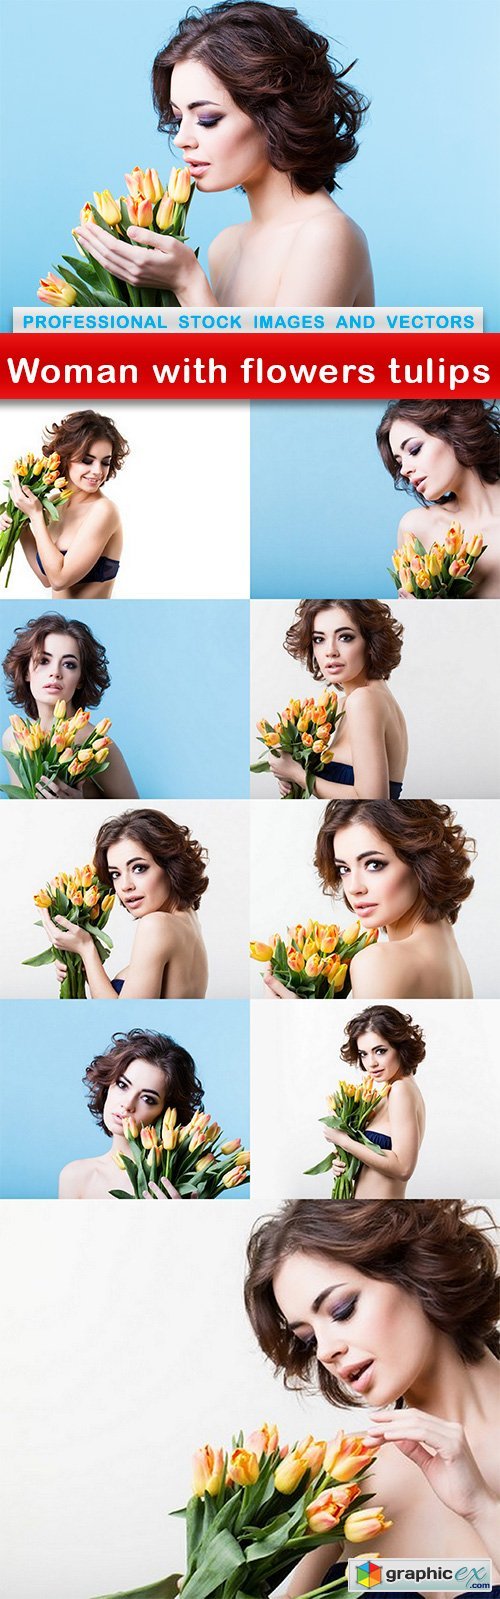 Woman with flowers tulips - 10 UHQ JPEG